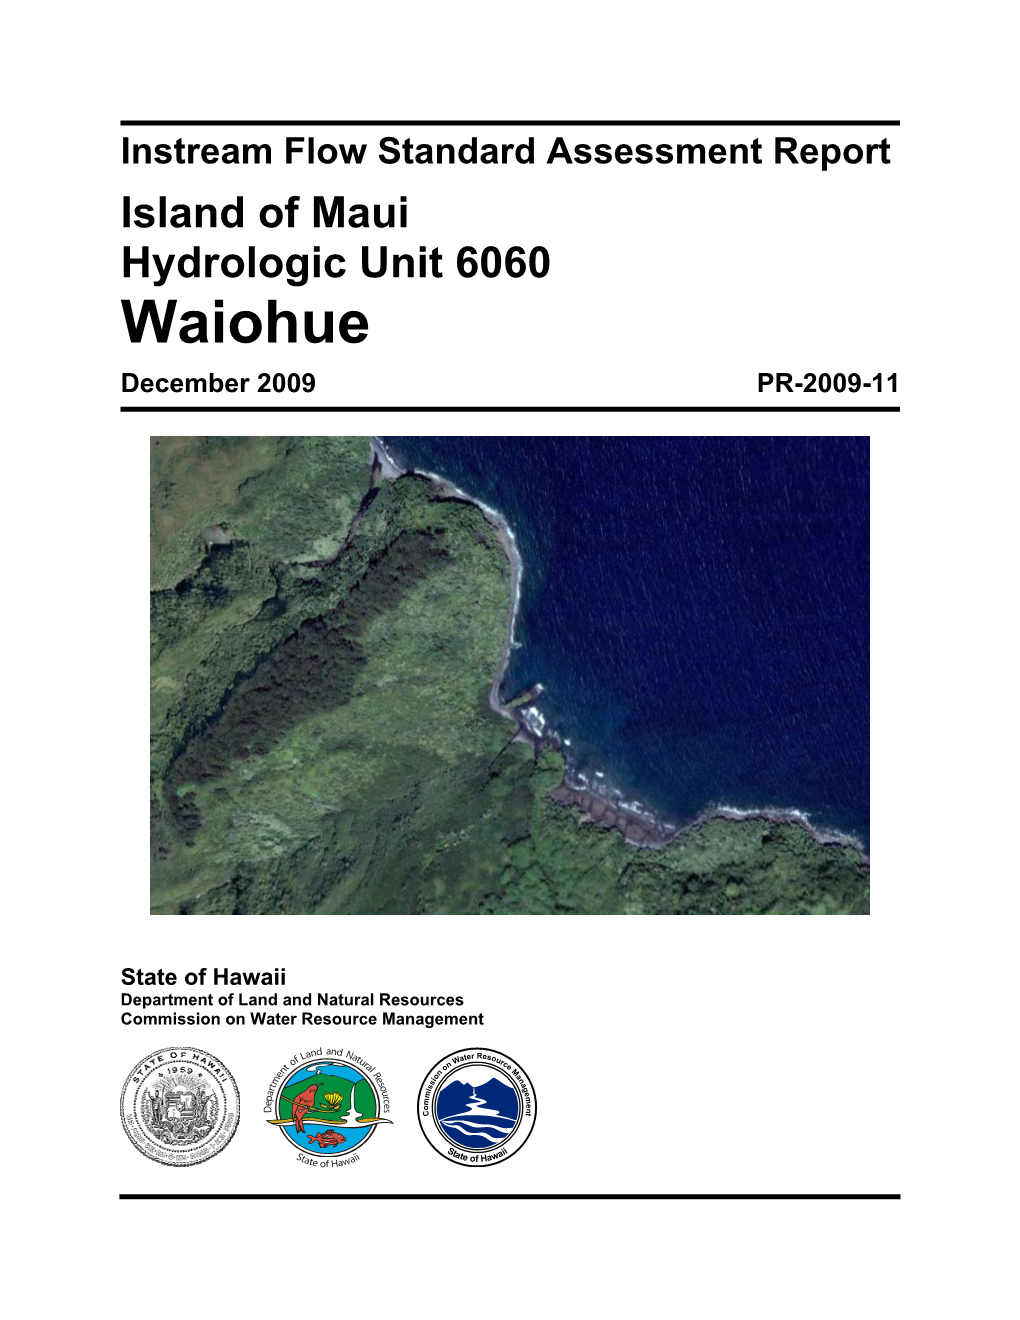 Instream Flow Standard Assessment Report Island of Maui Hydrologic Unit 6060 Waiohue December 2009 PR-2009-11